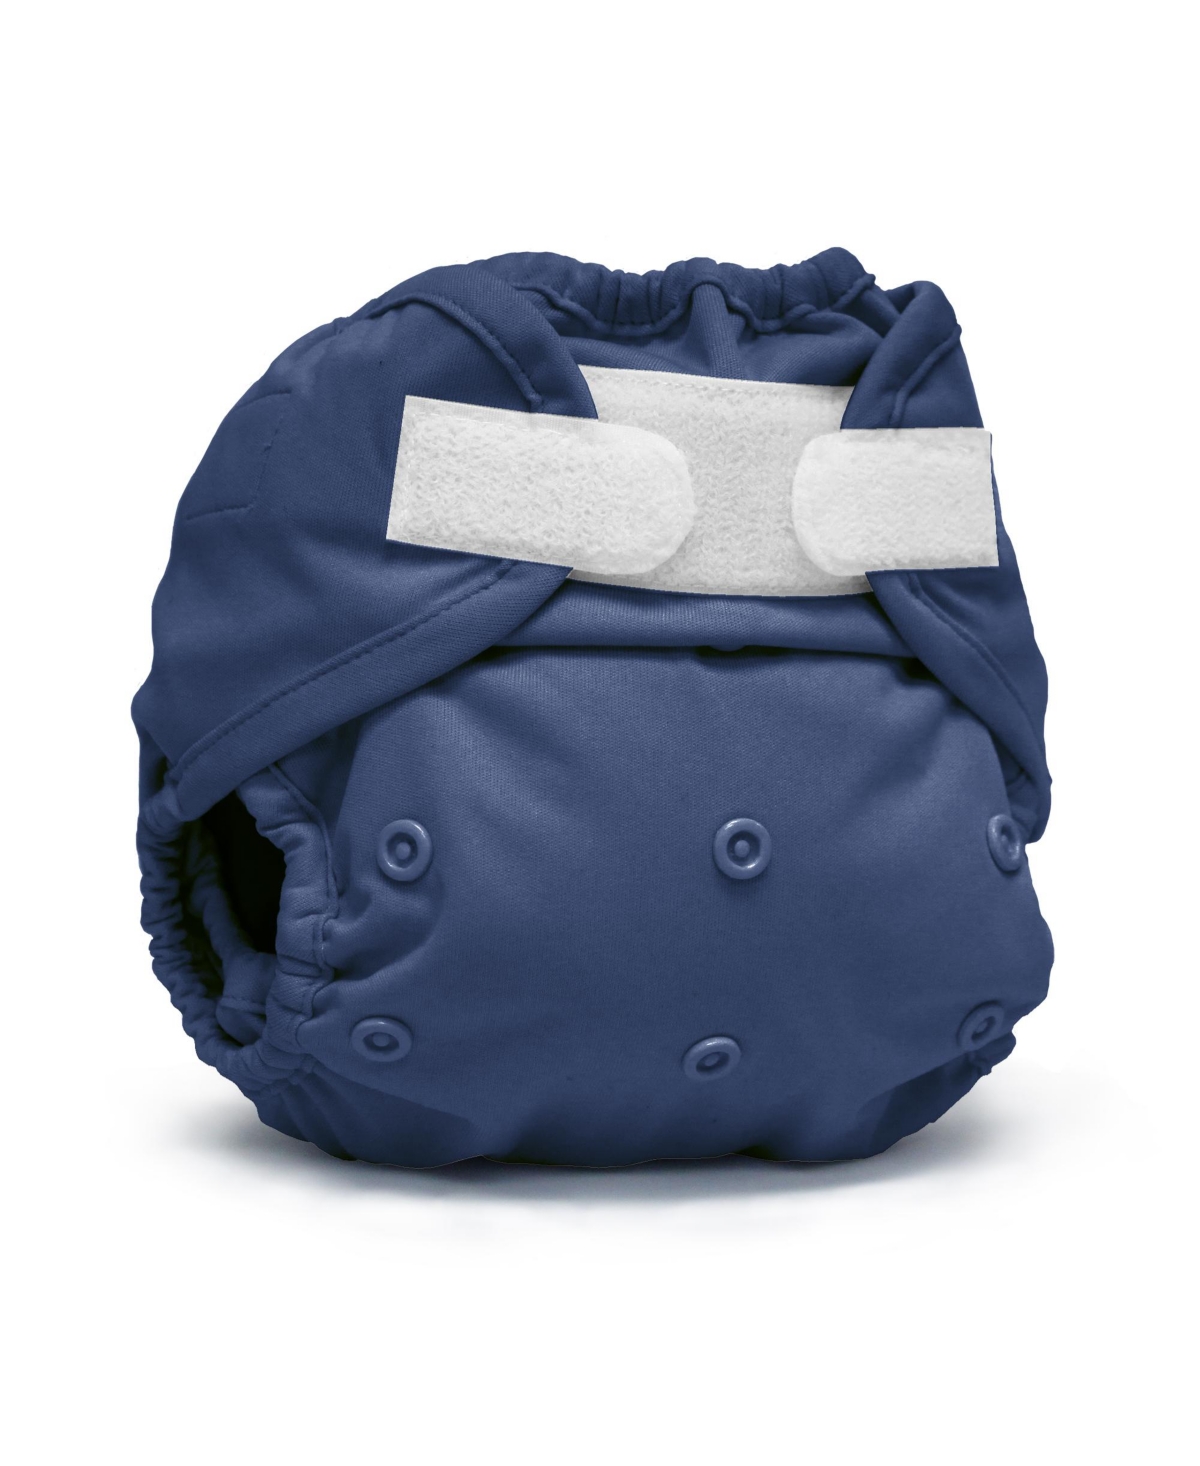 Kanga Care Rumparooz Reusable One Size Cloth Diaper Cover Aplix In Nautical